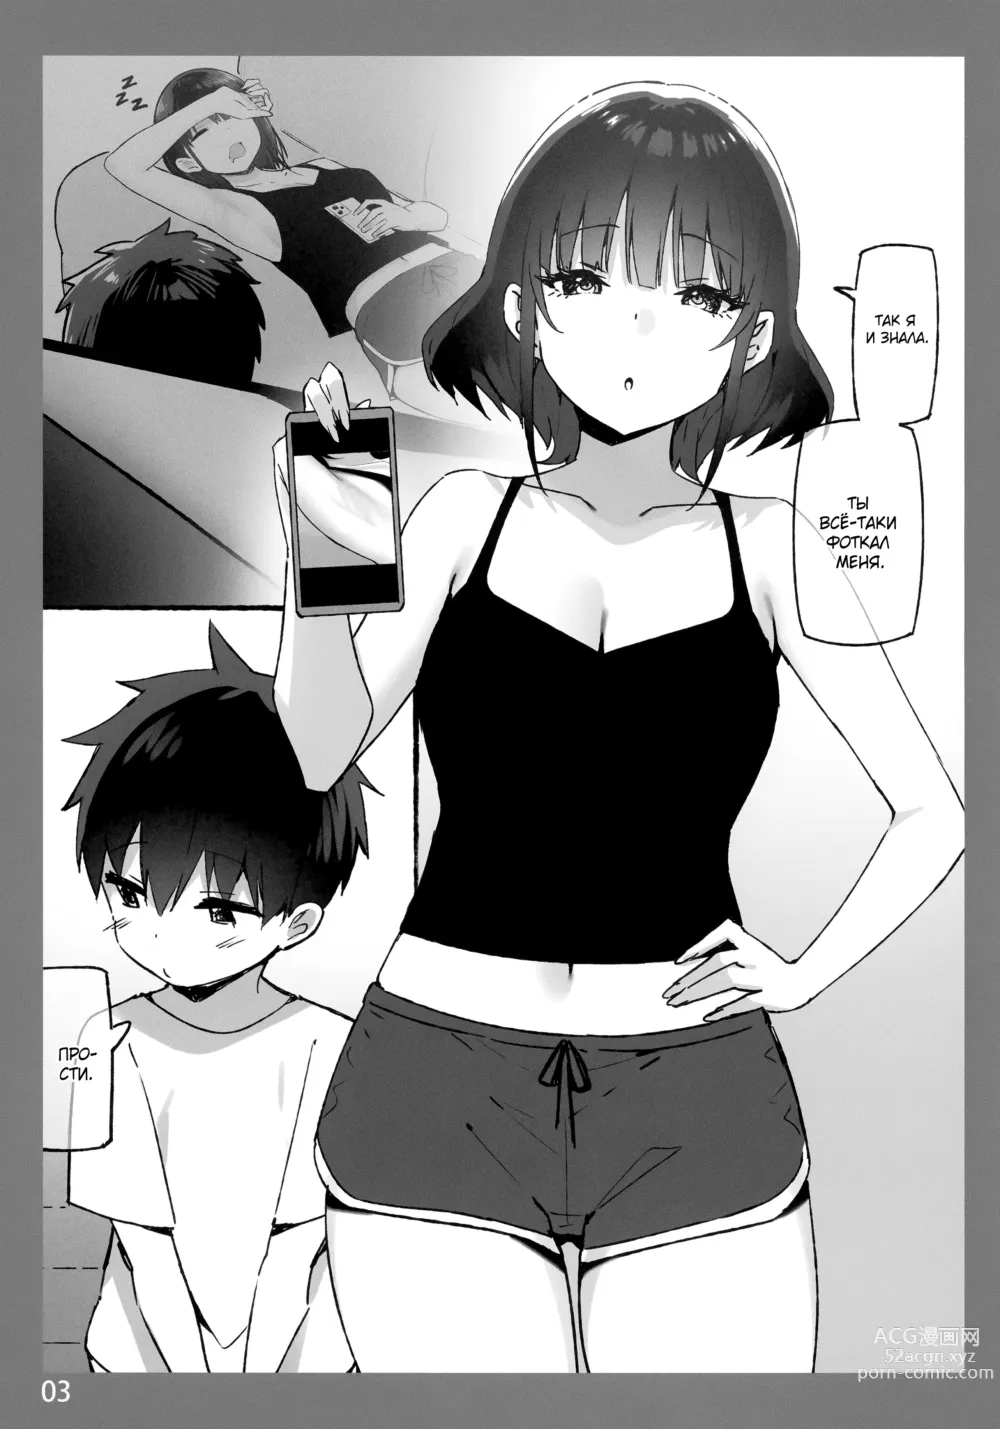 Page 3 of doujinshi Ощущение таяния с сестрой SP 2